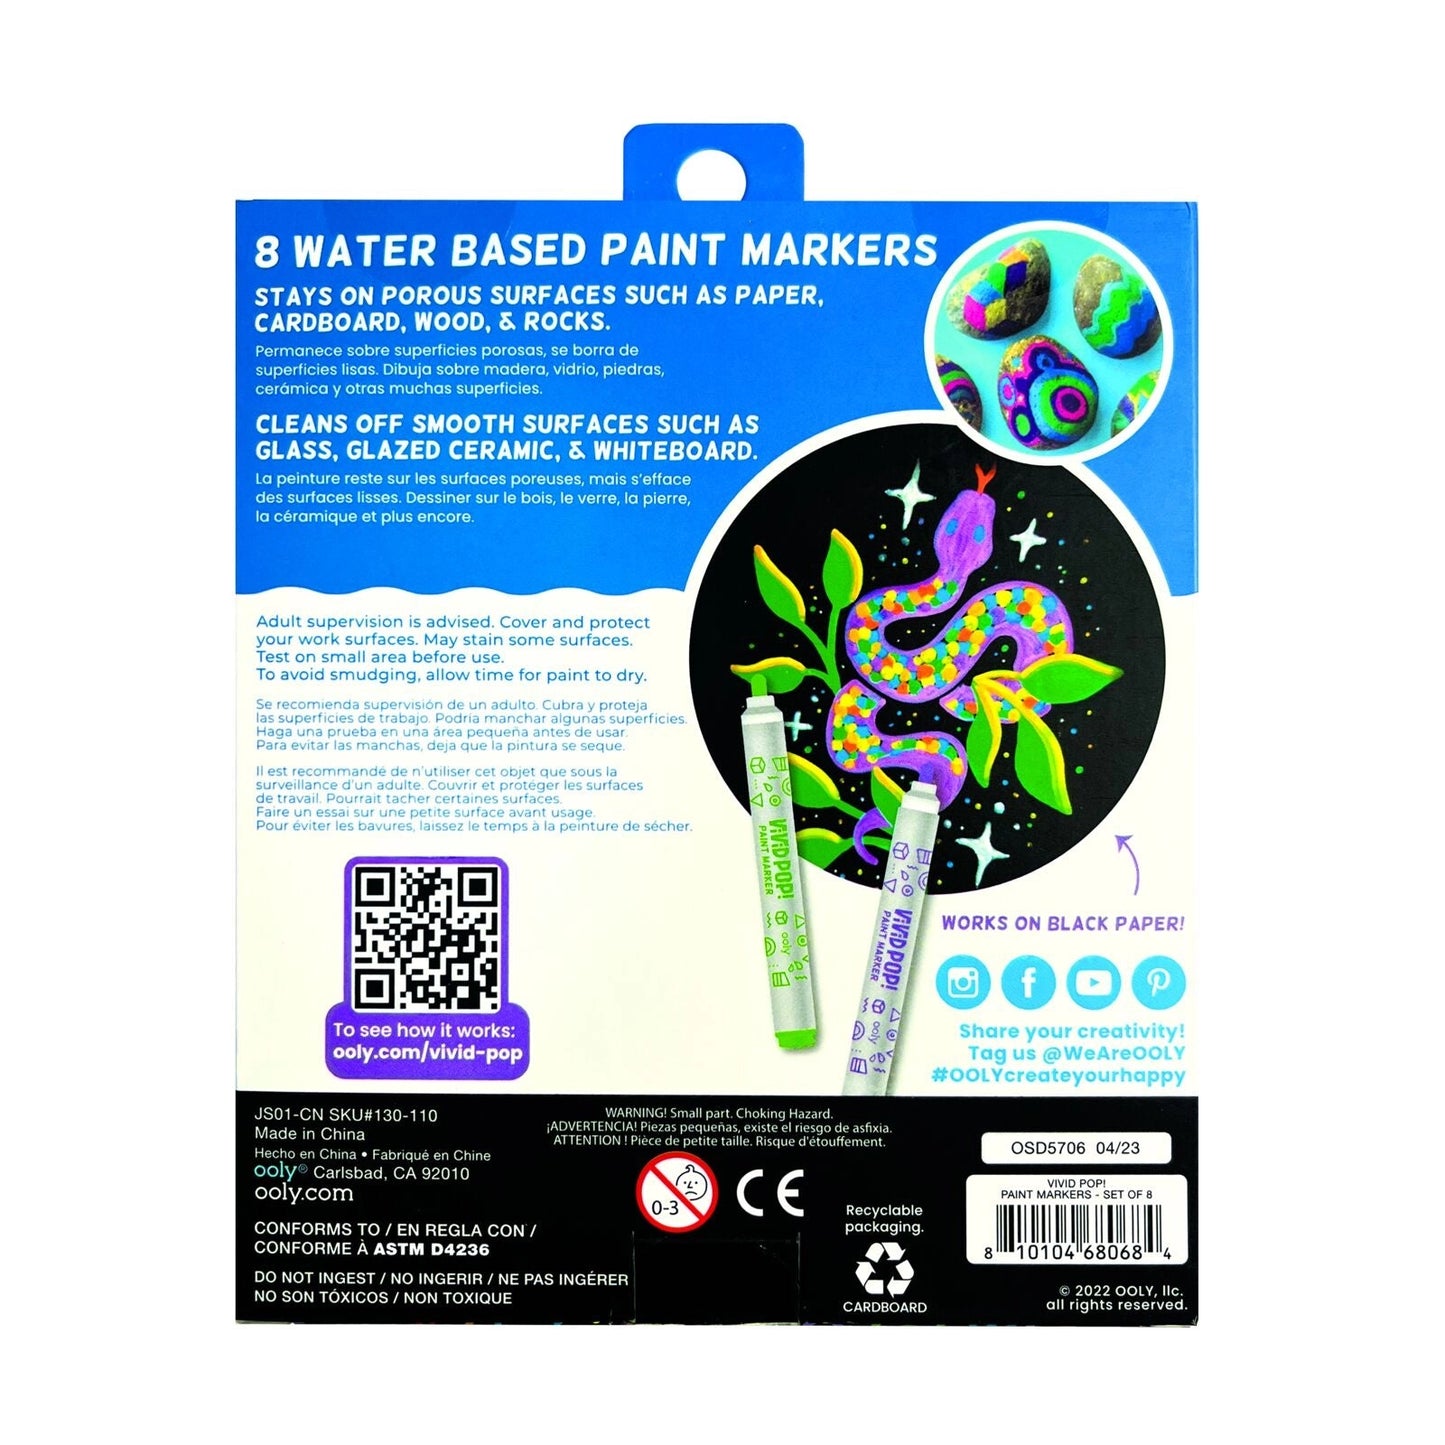 Vivid Pop! Water-Based Paint Markers